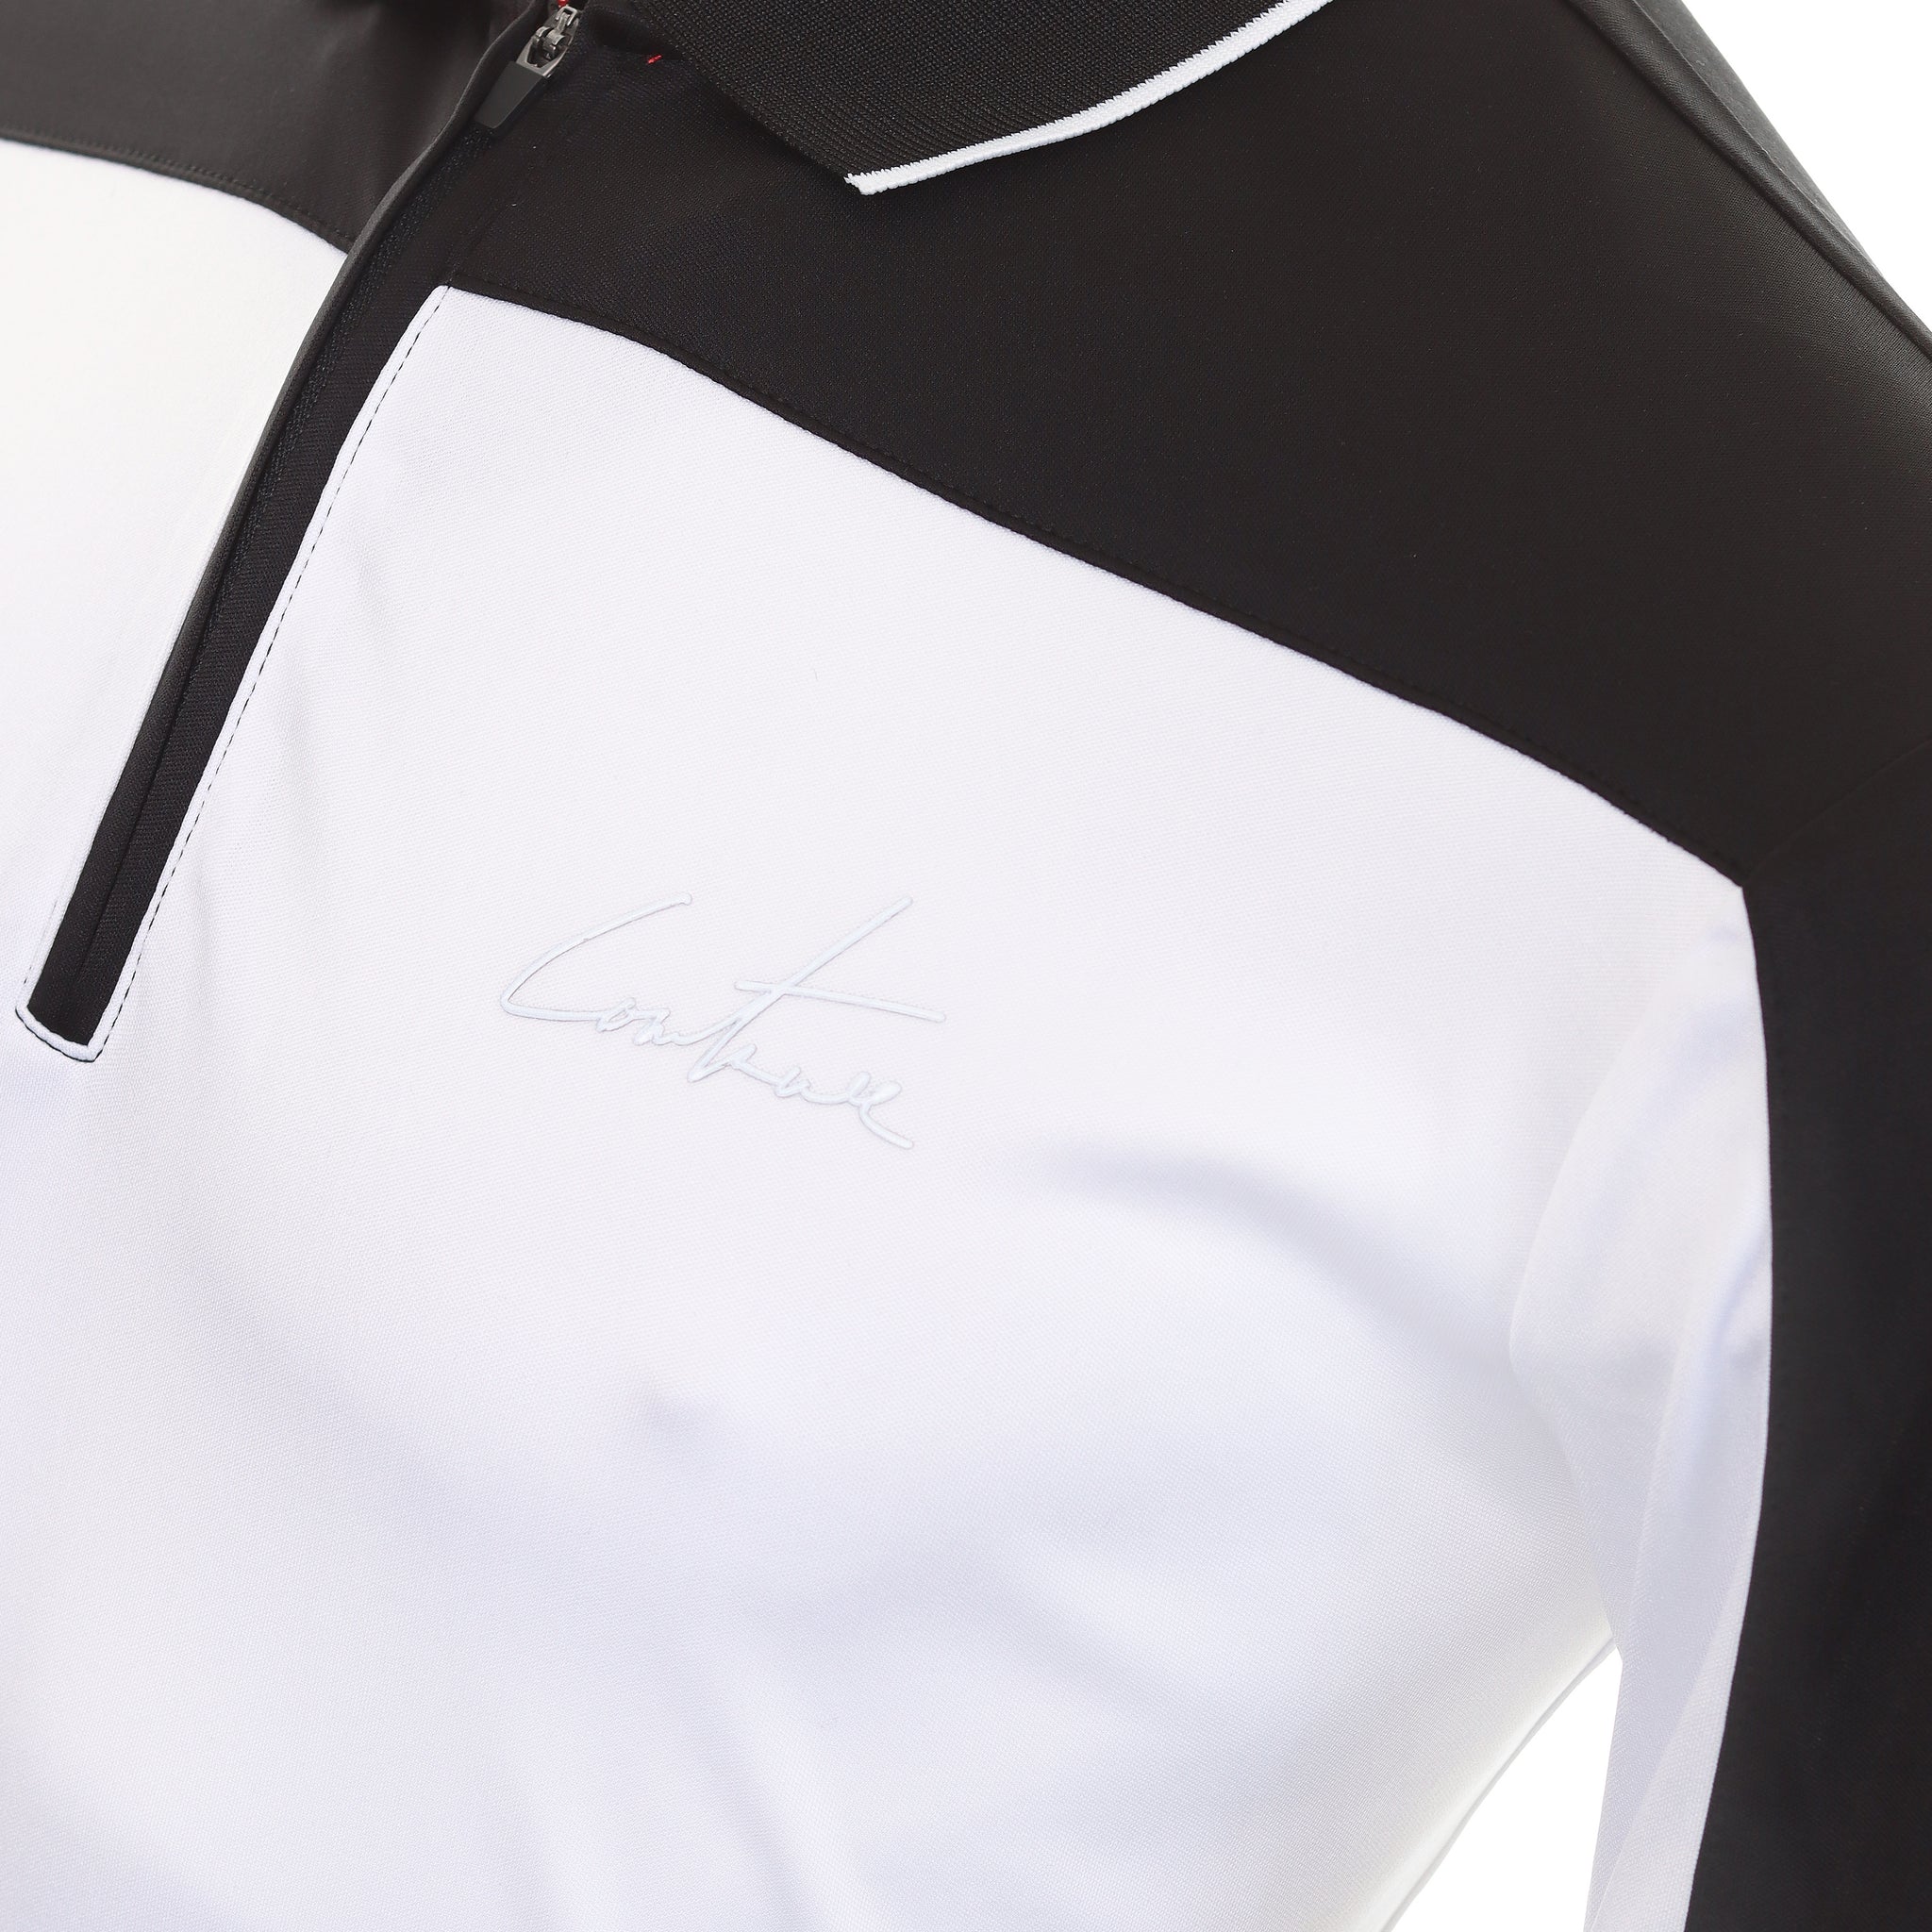 couture-club-golf-panelled-1-4-shirt-tccm1977-black-white